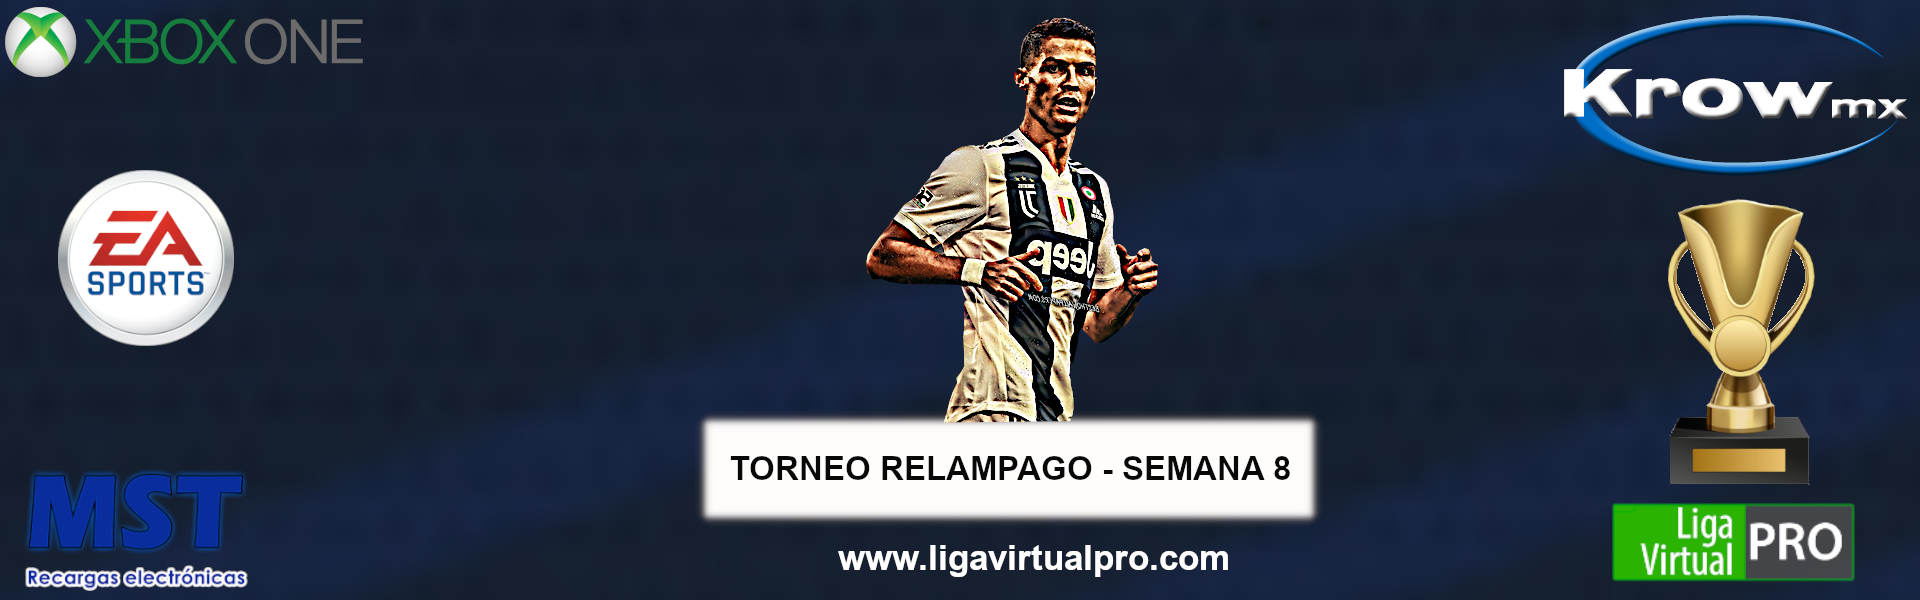 Logo-TORNEO RELAMPAGO - SEMANA 8